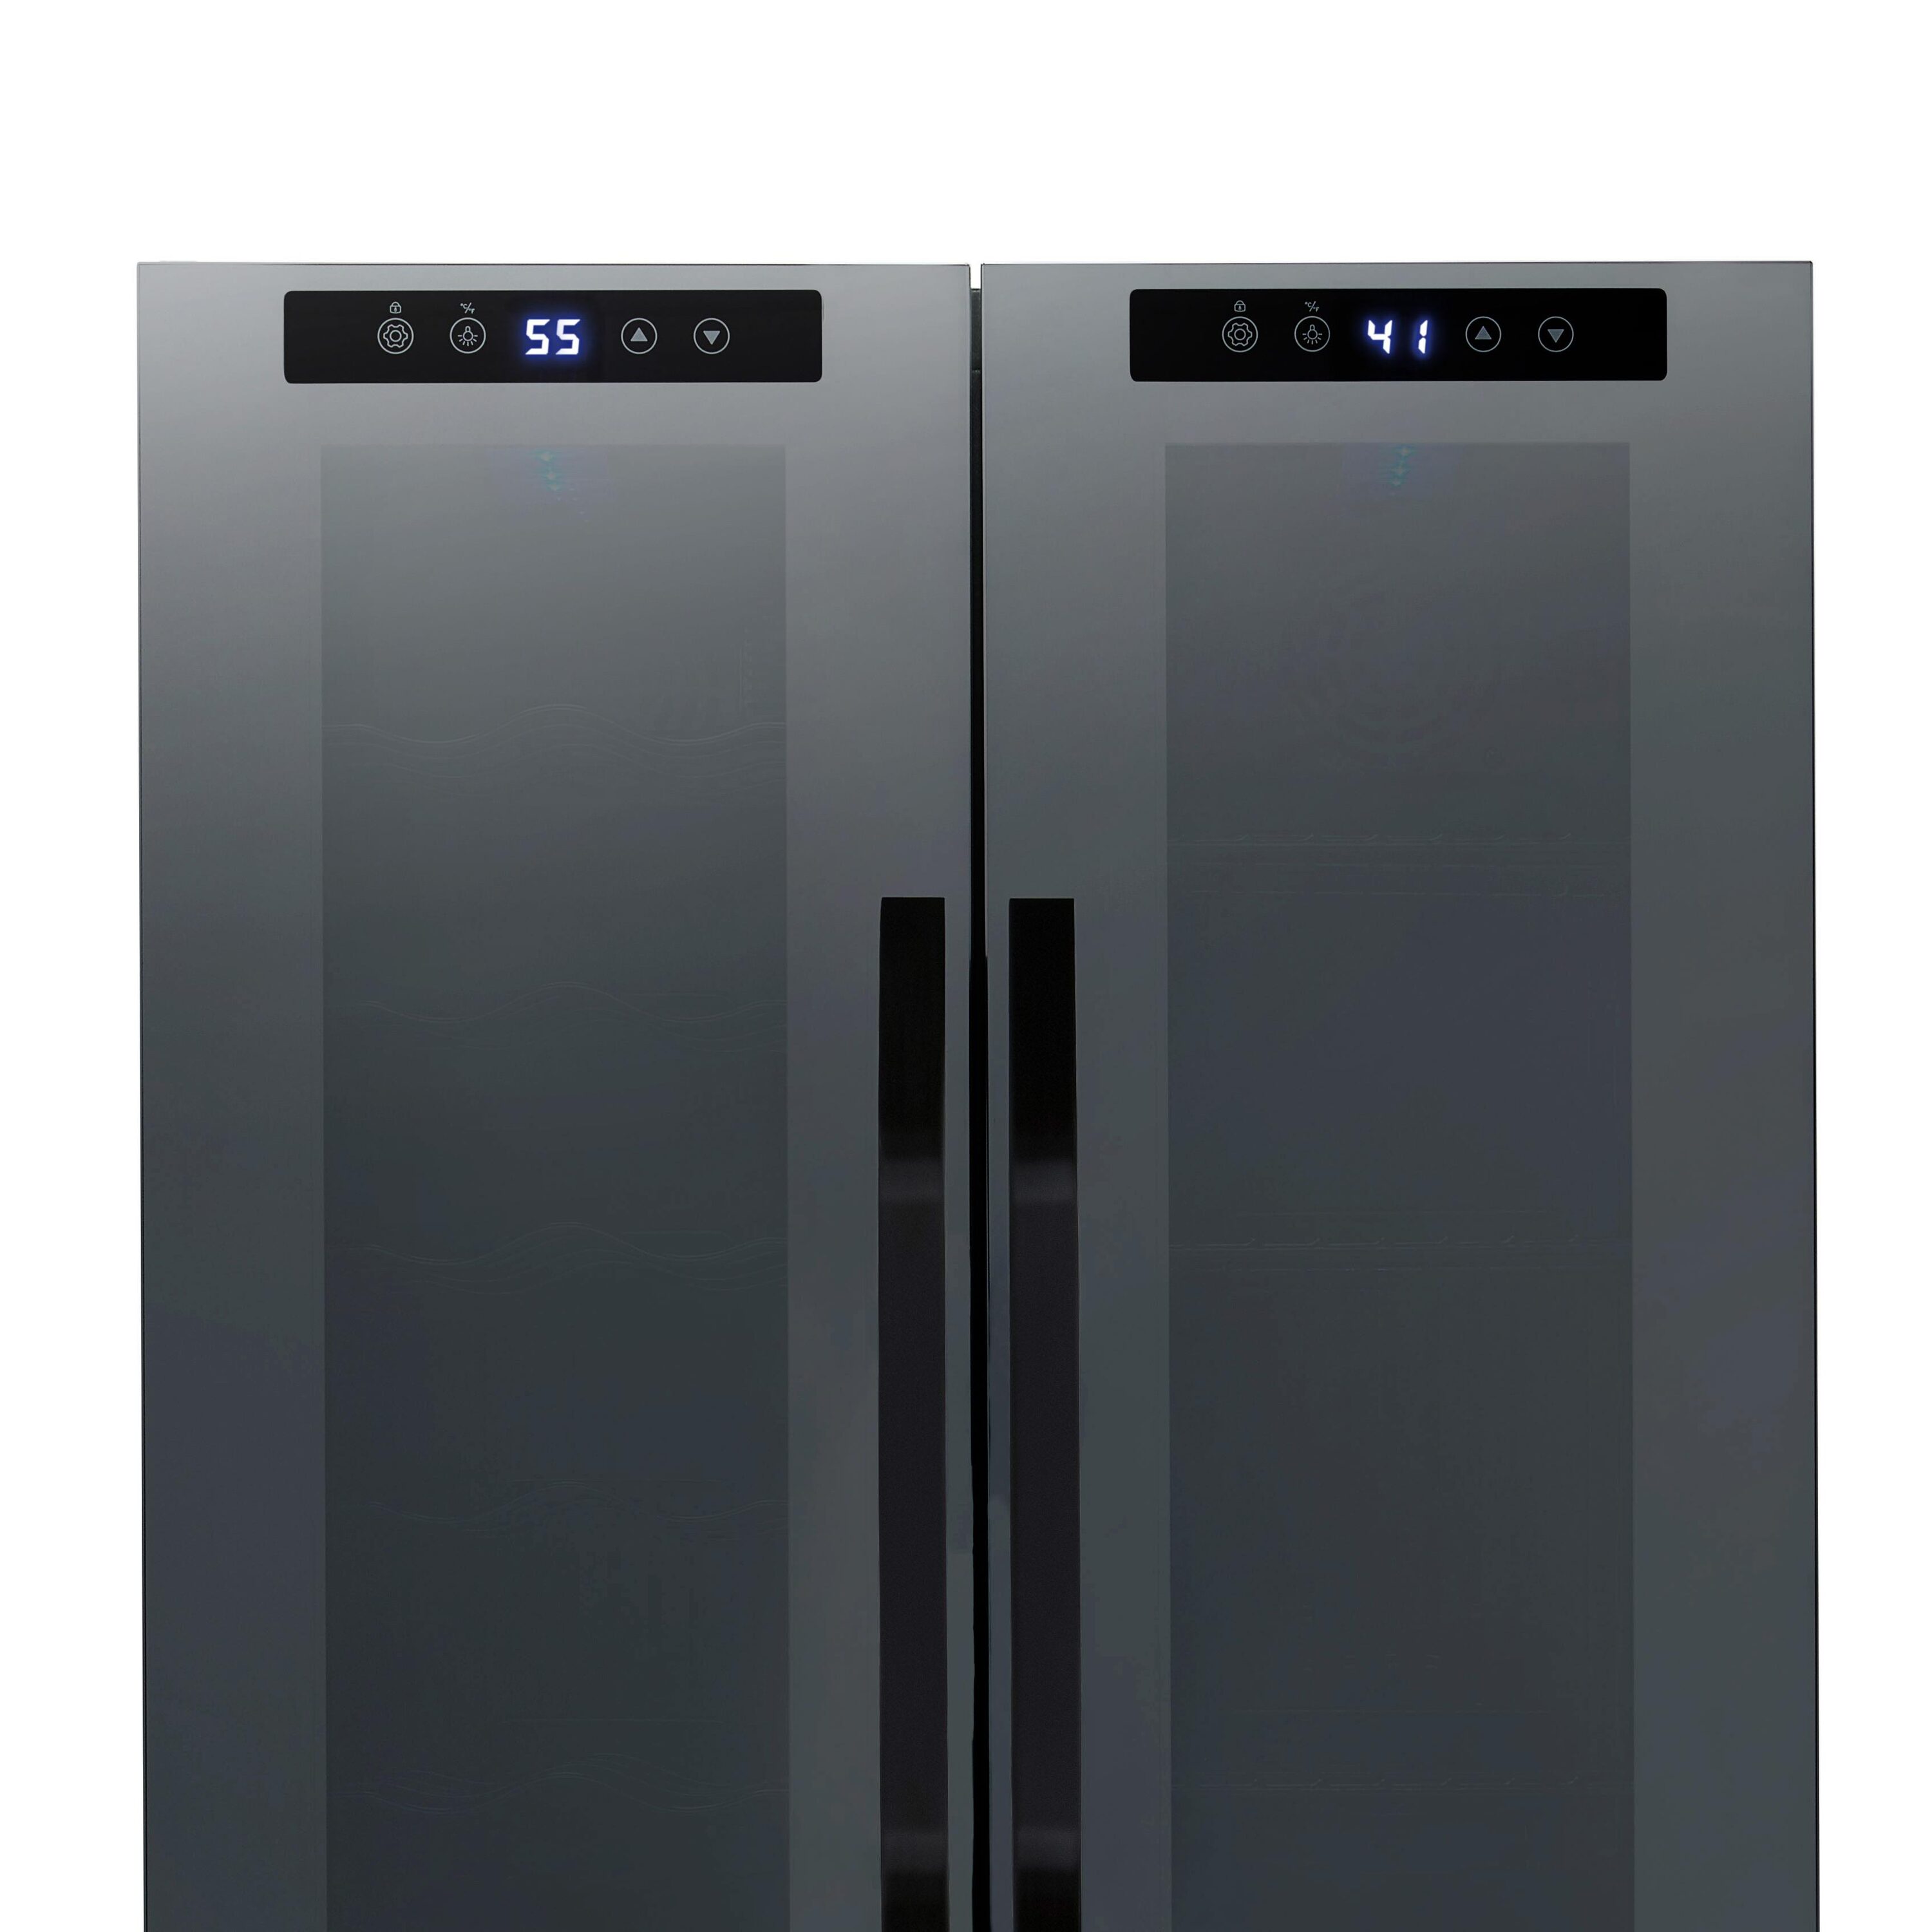 NewAir Shadow Series 16 Bottle Wine Cooler Refrigerator - Black